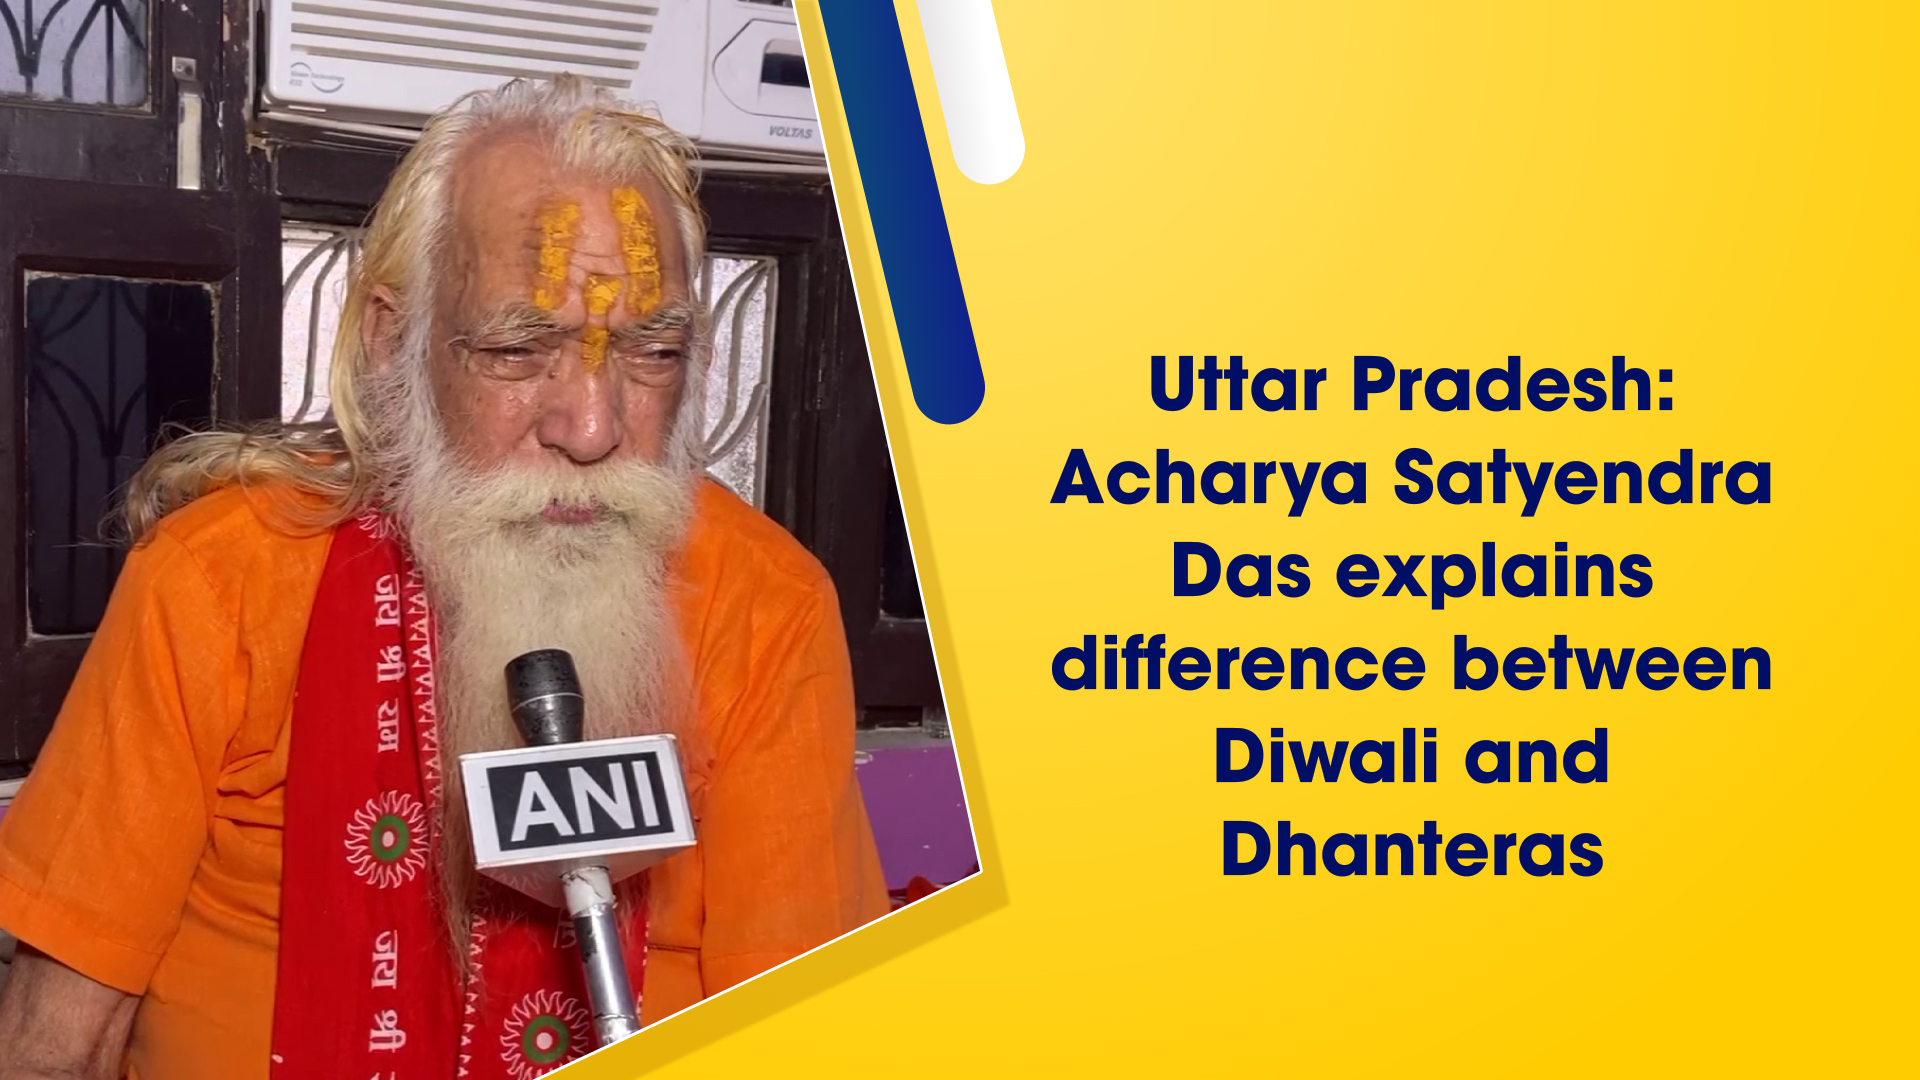 Uttar Pradesh: Acharya Satyendra Das explains difference between Diwali and Dhanteras